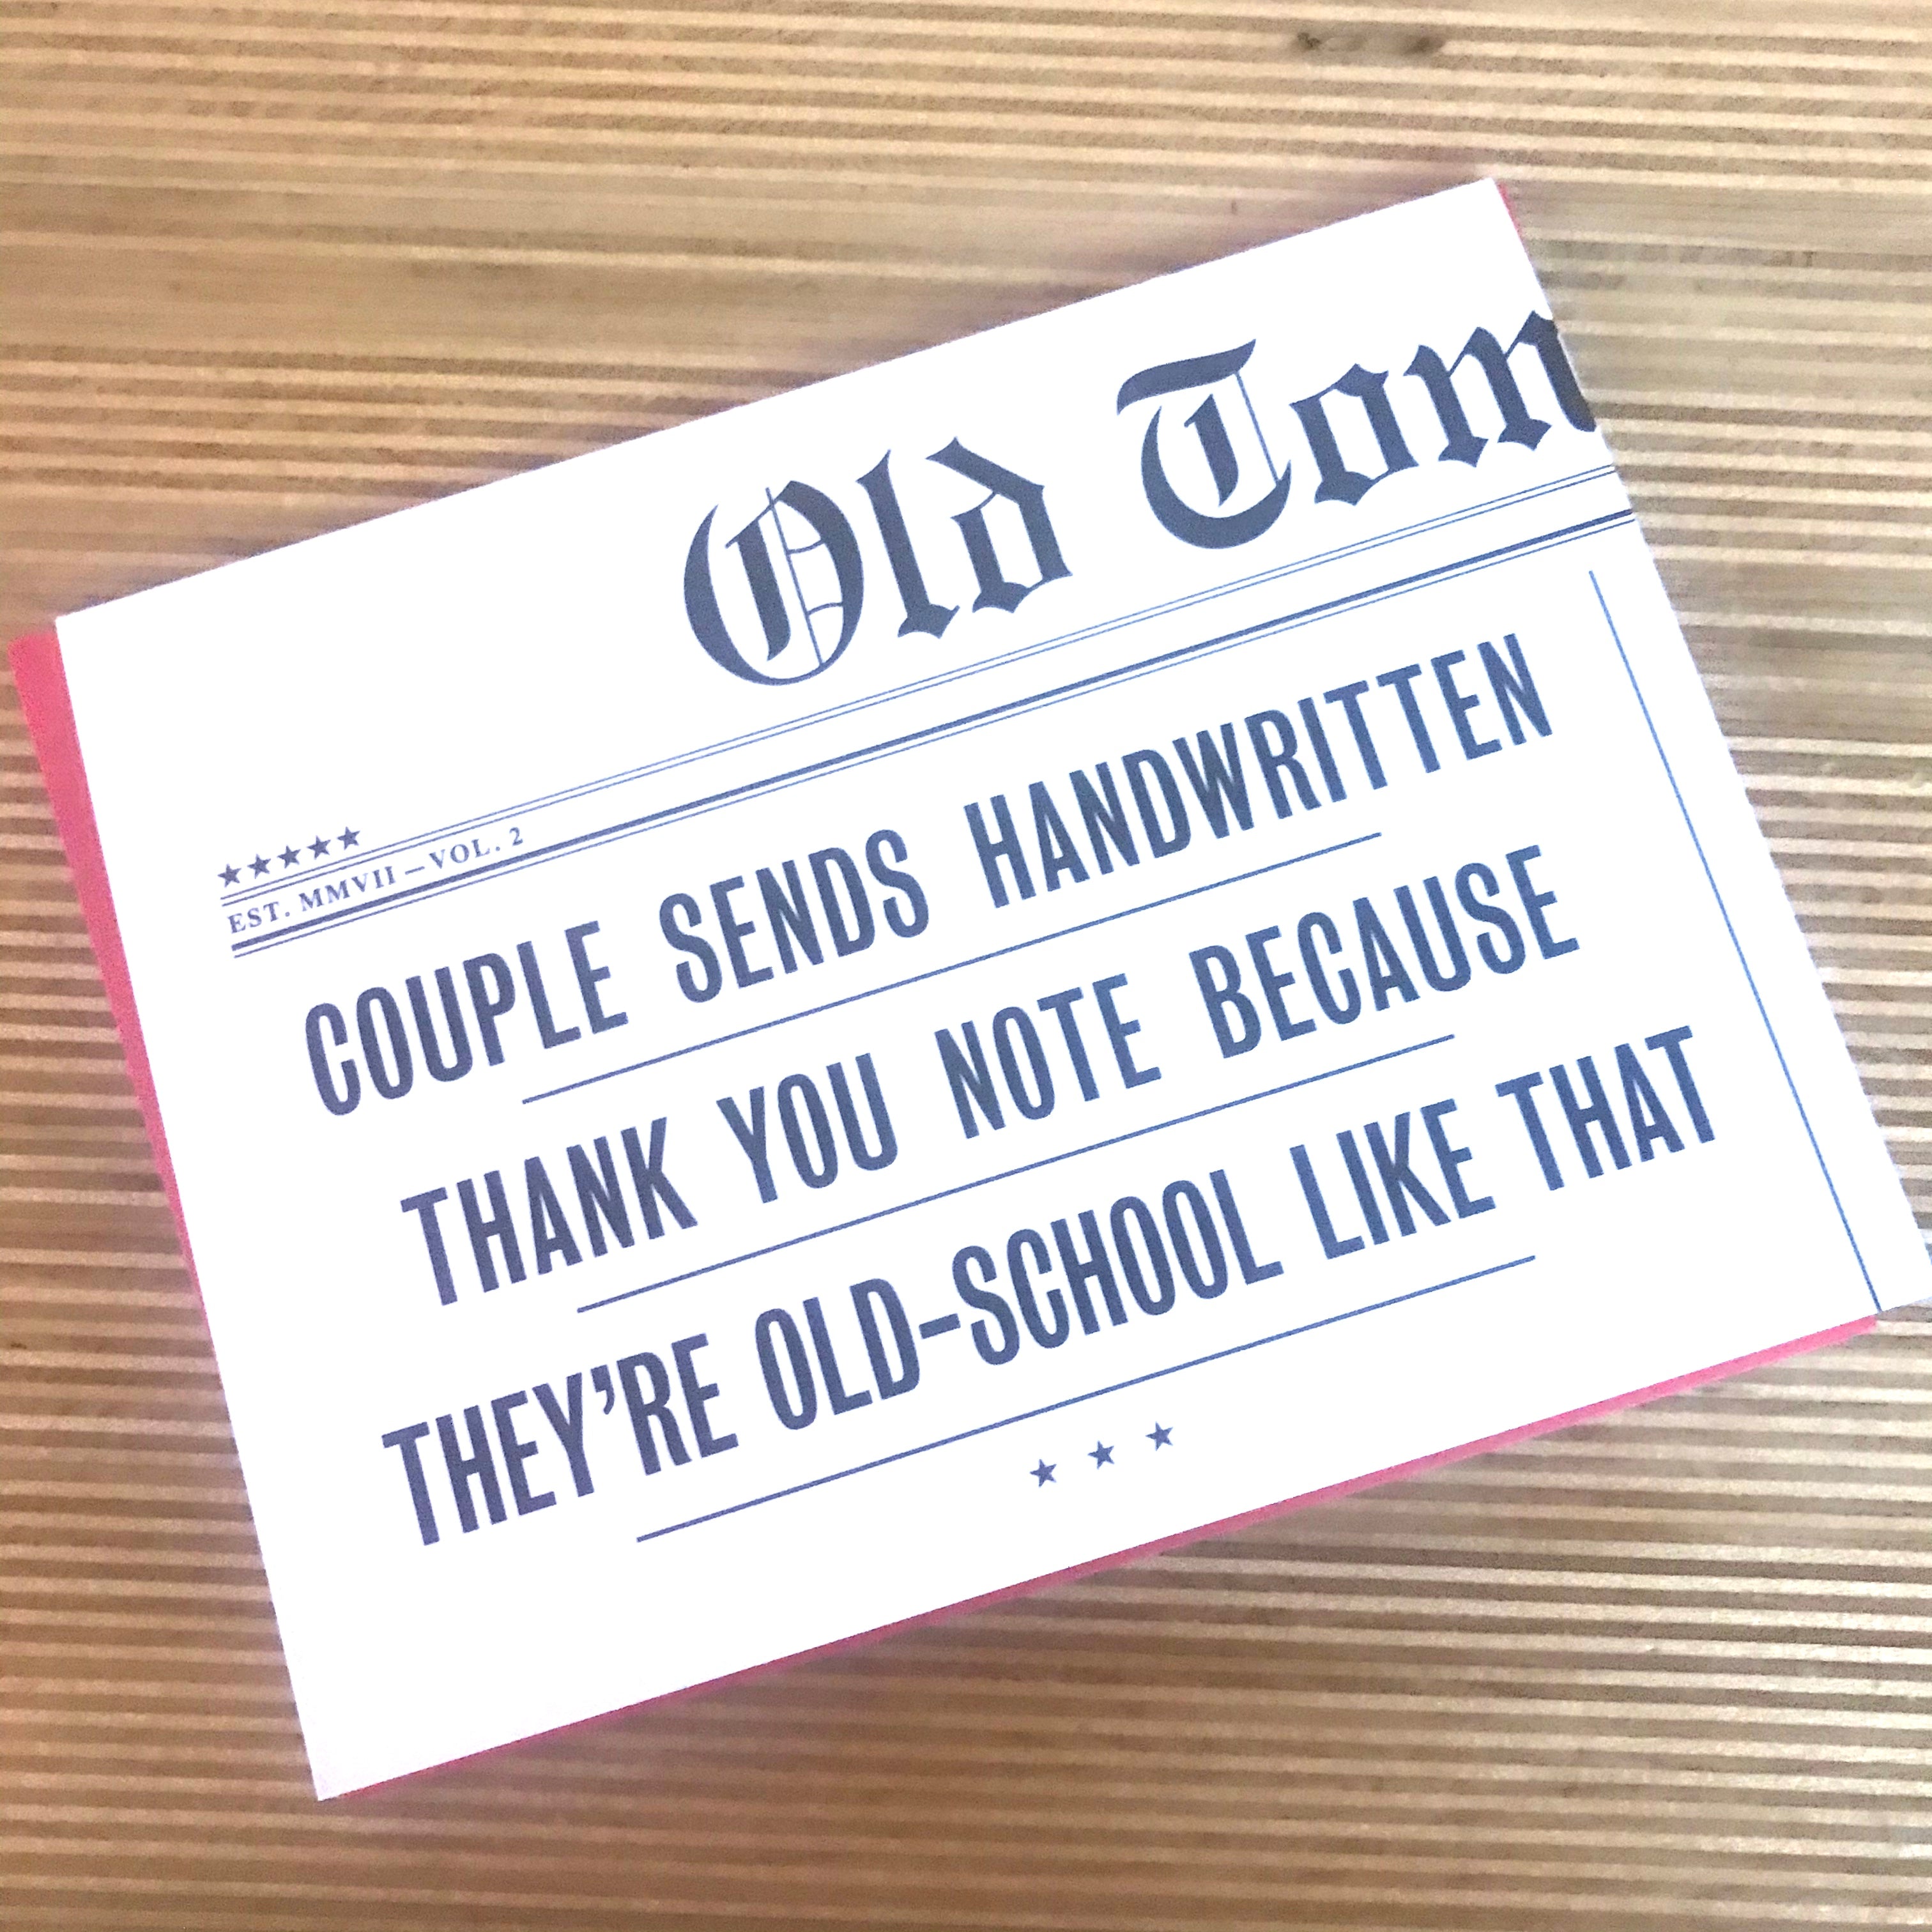 Couple send handwritten thank you greeting card